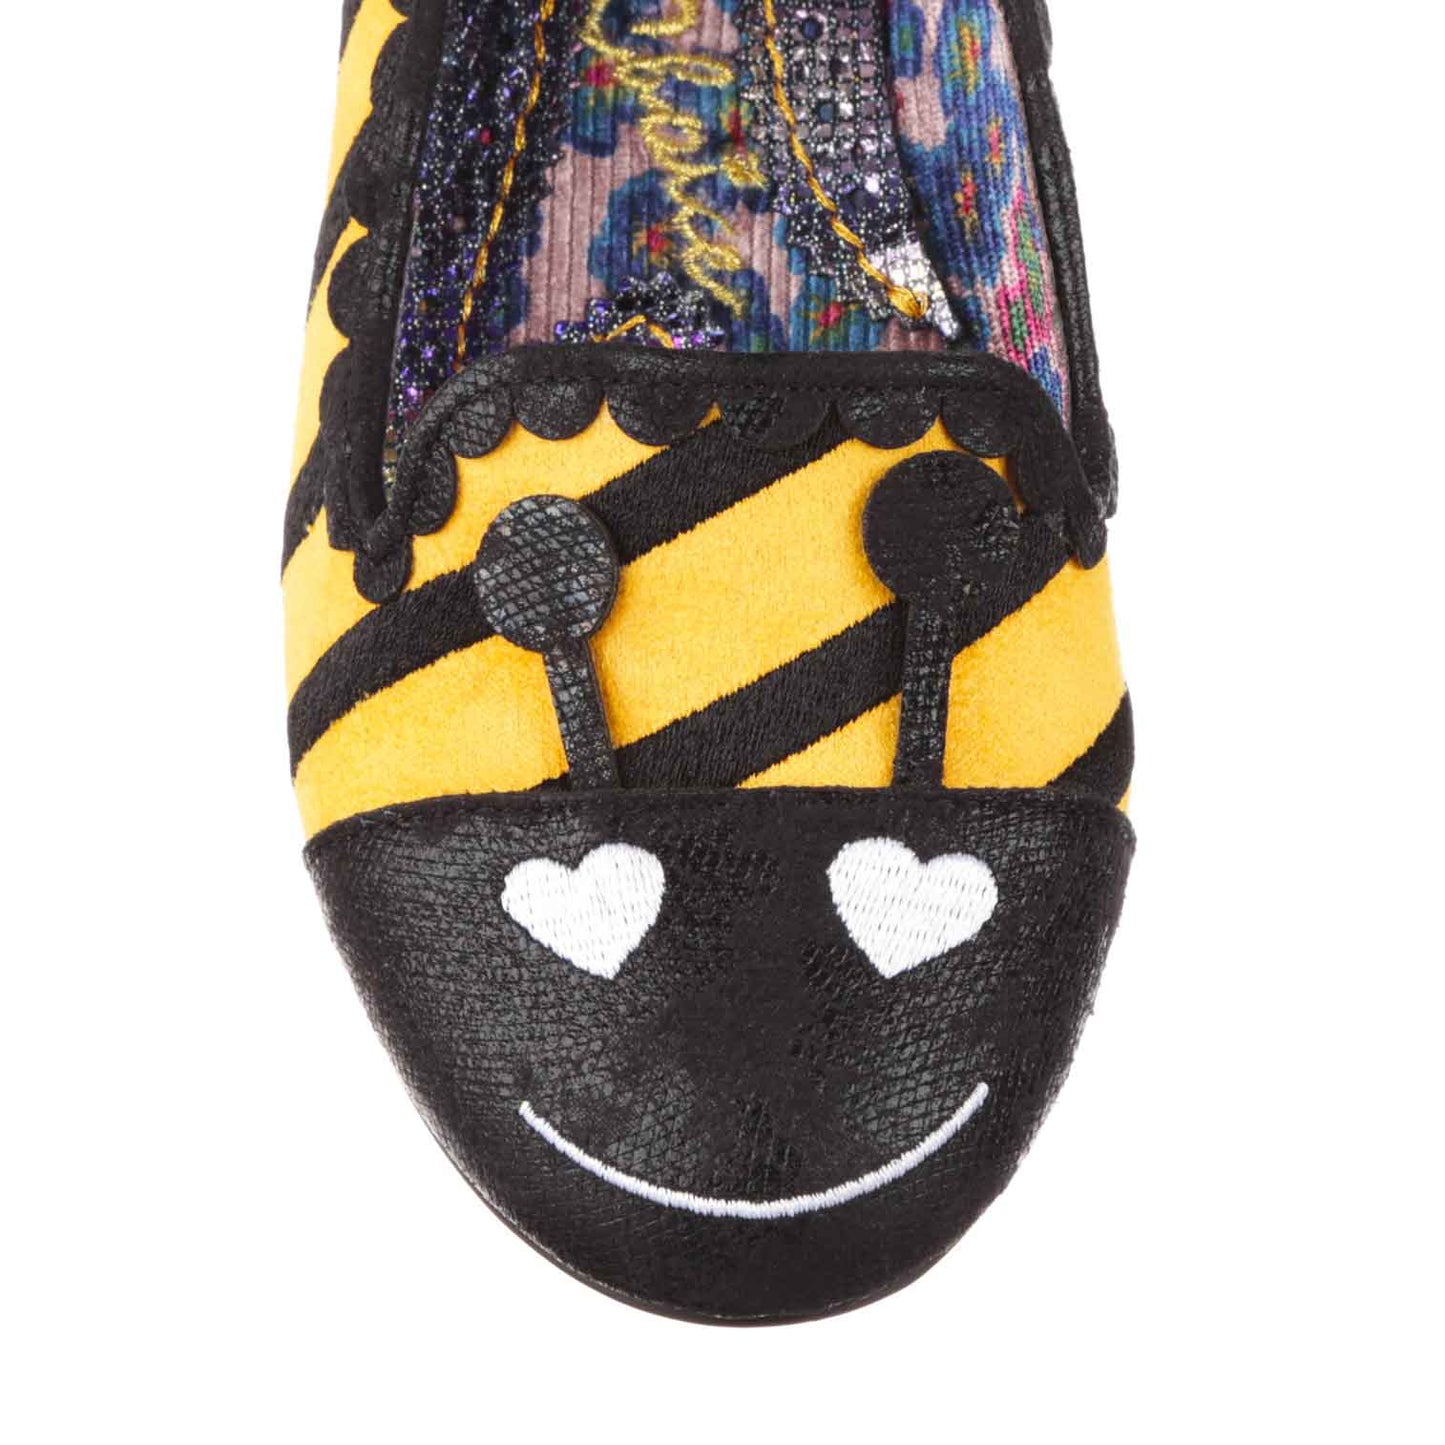 Irregular Choice Women's 4329-92 Bug It Up Flat Shoes Black/Yellow